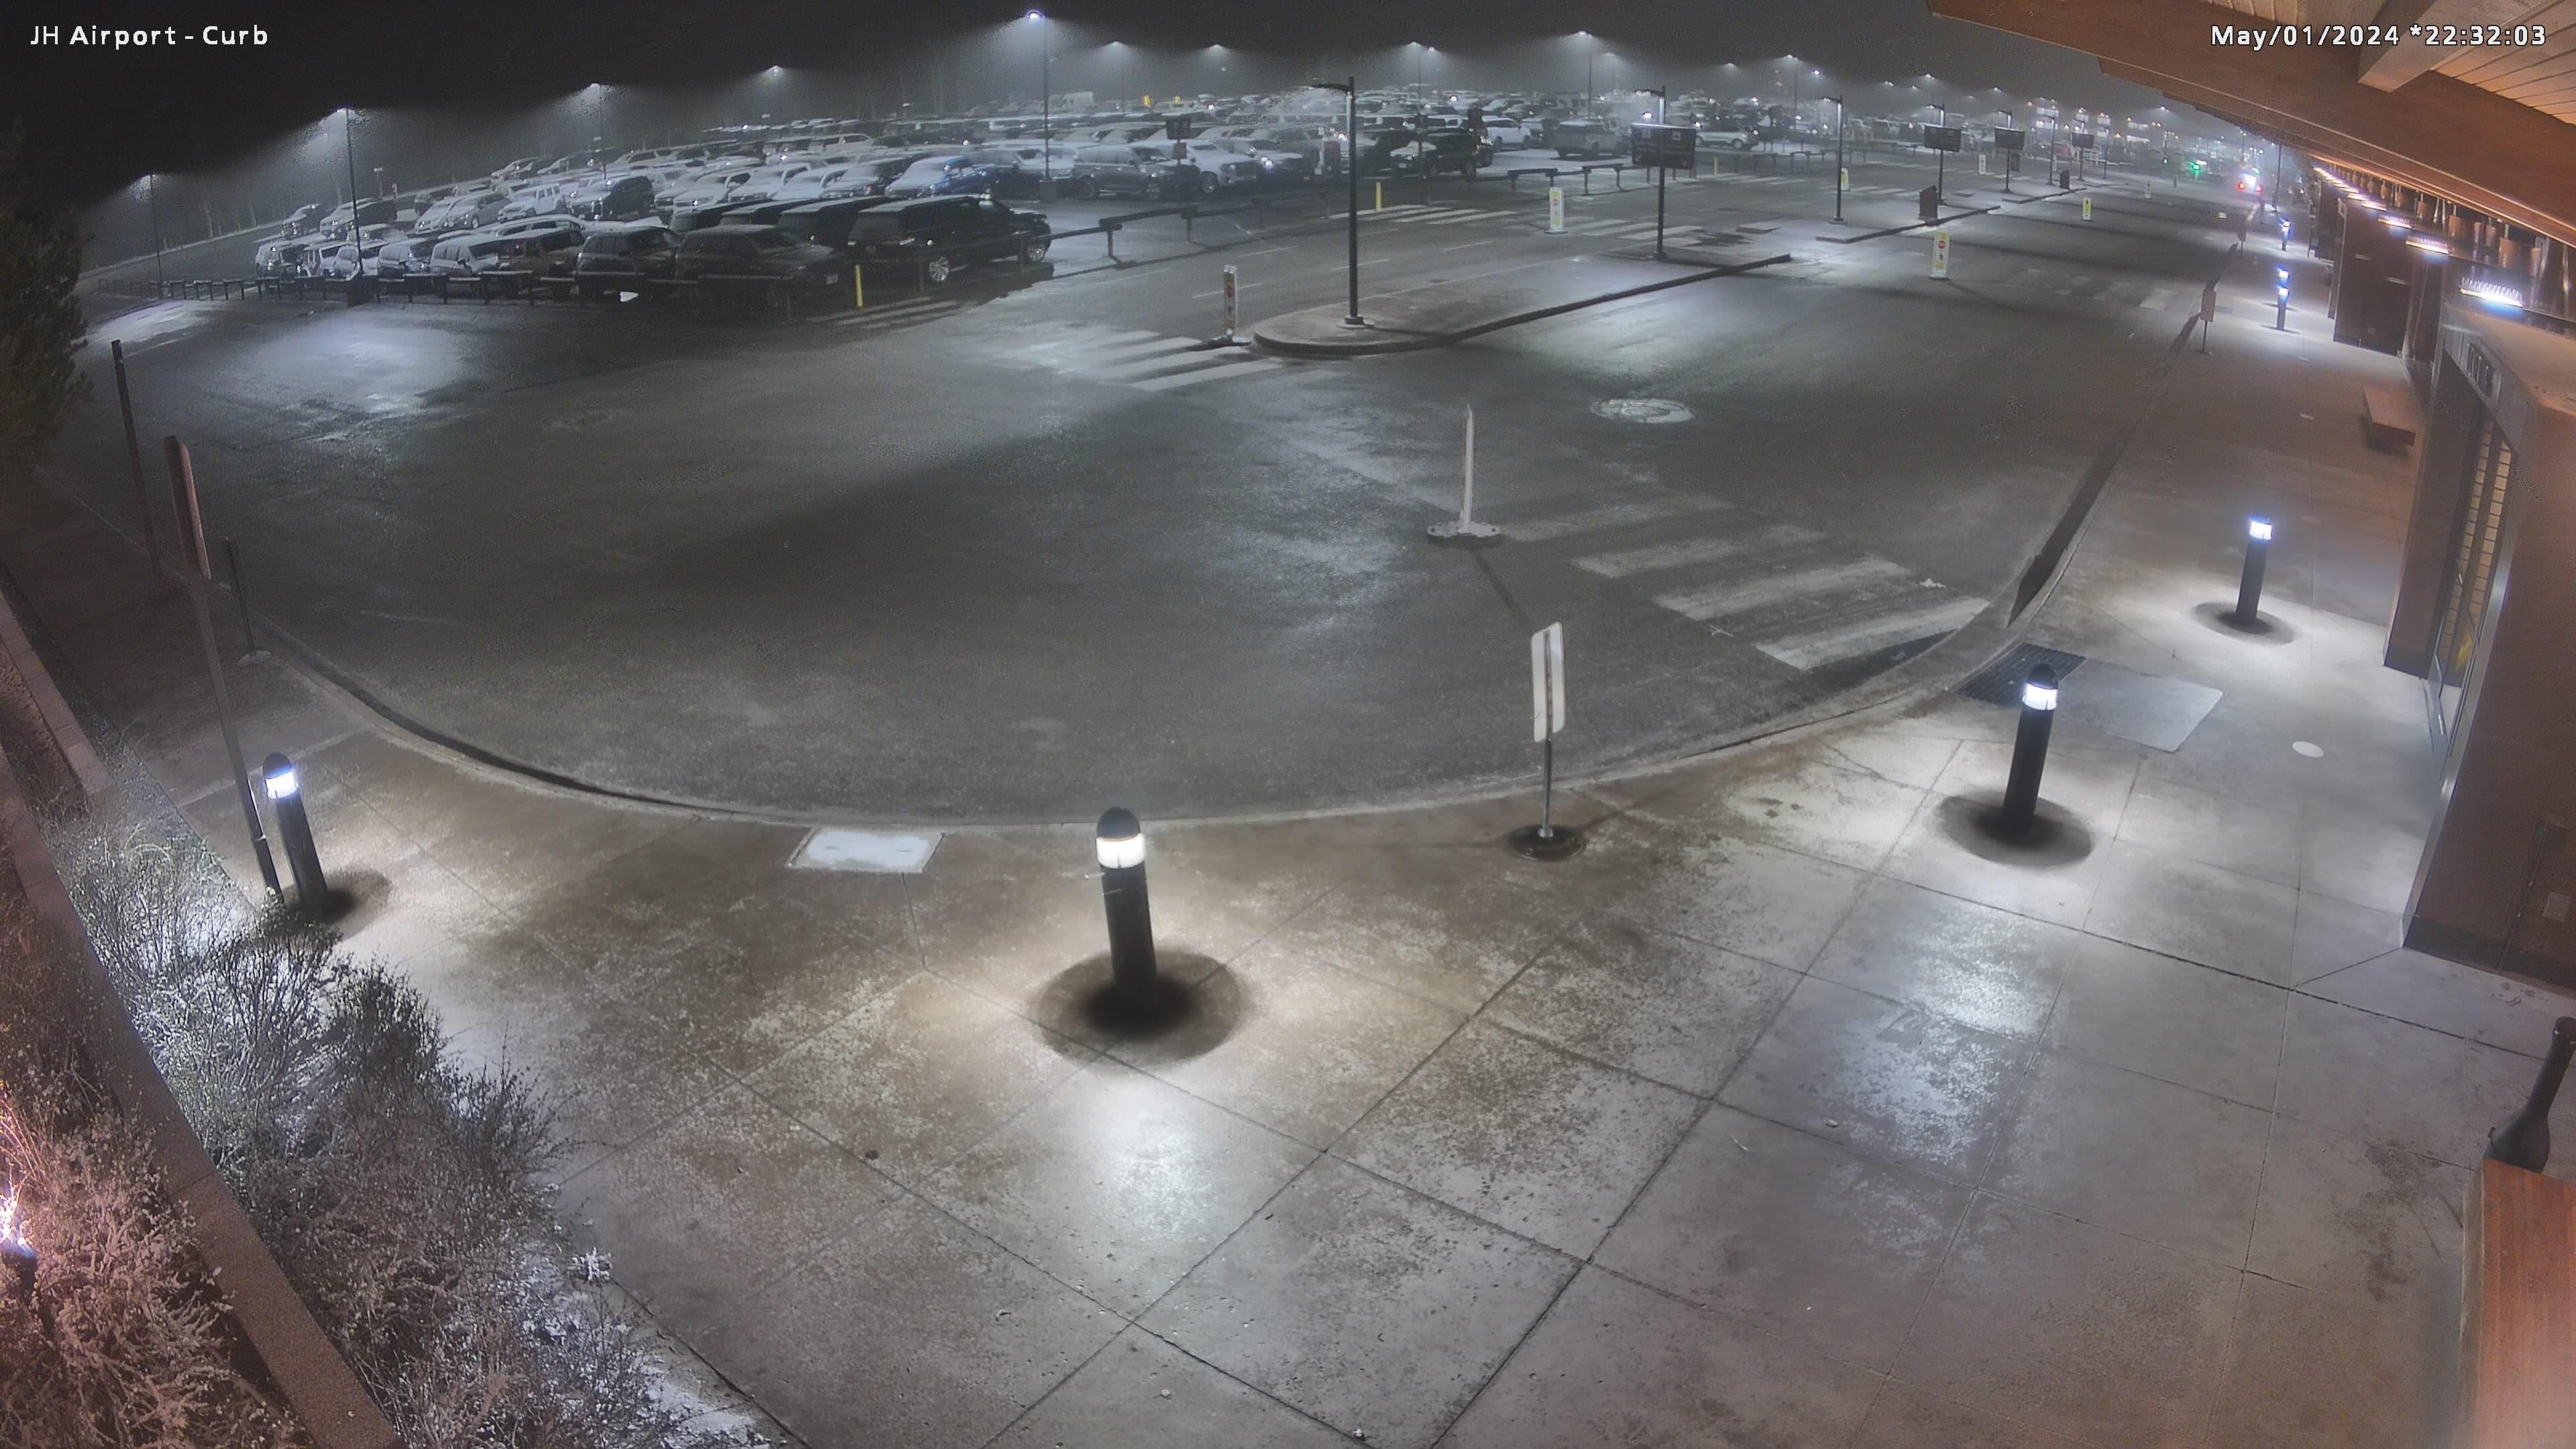 Jackson Hole Airport Webcam - Curb Pickup Area